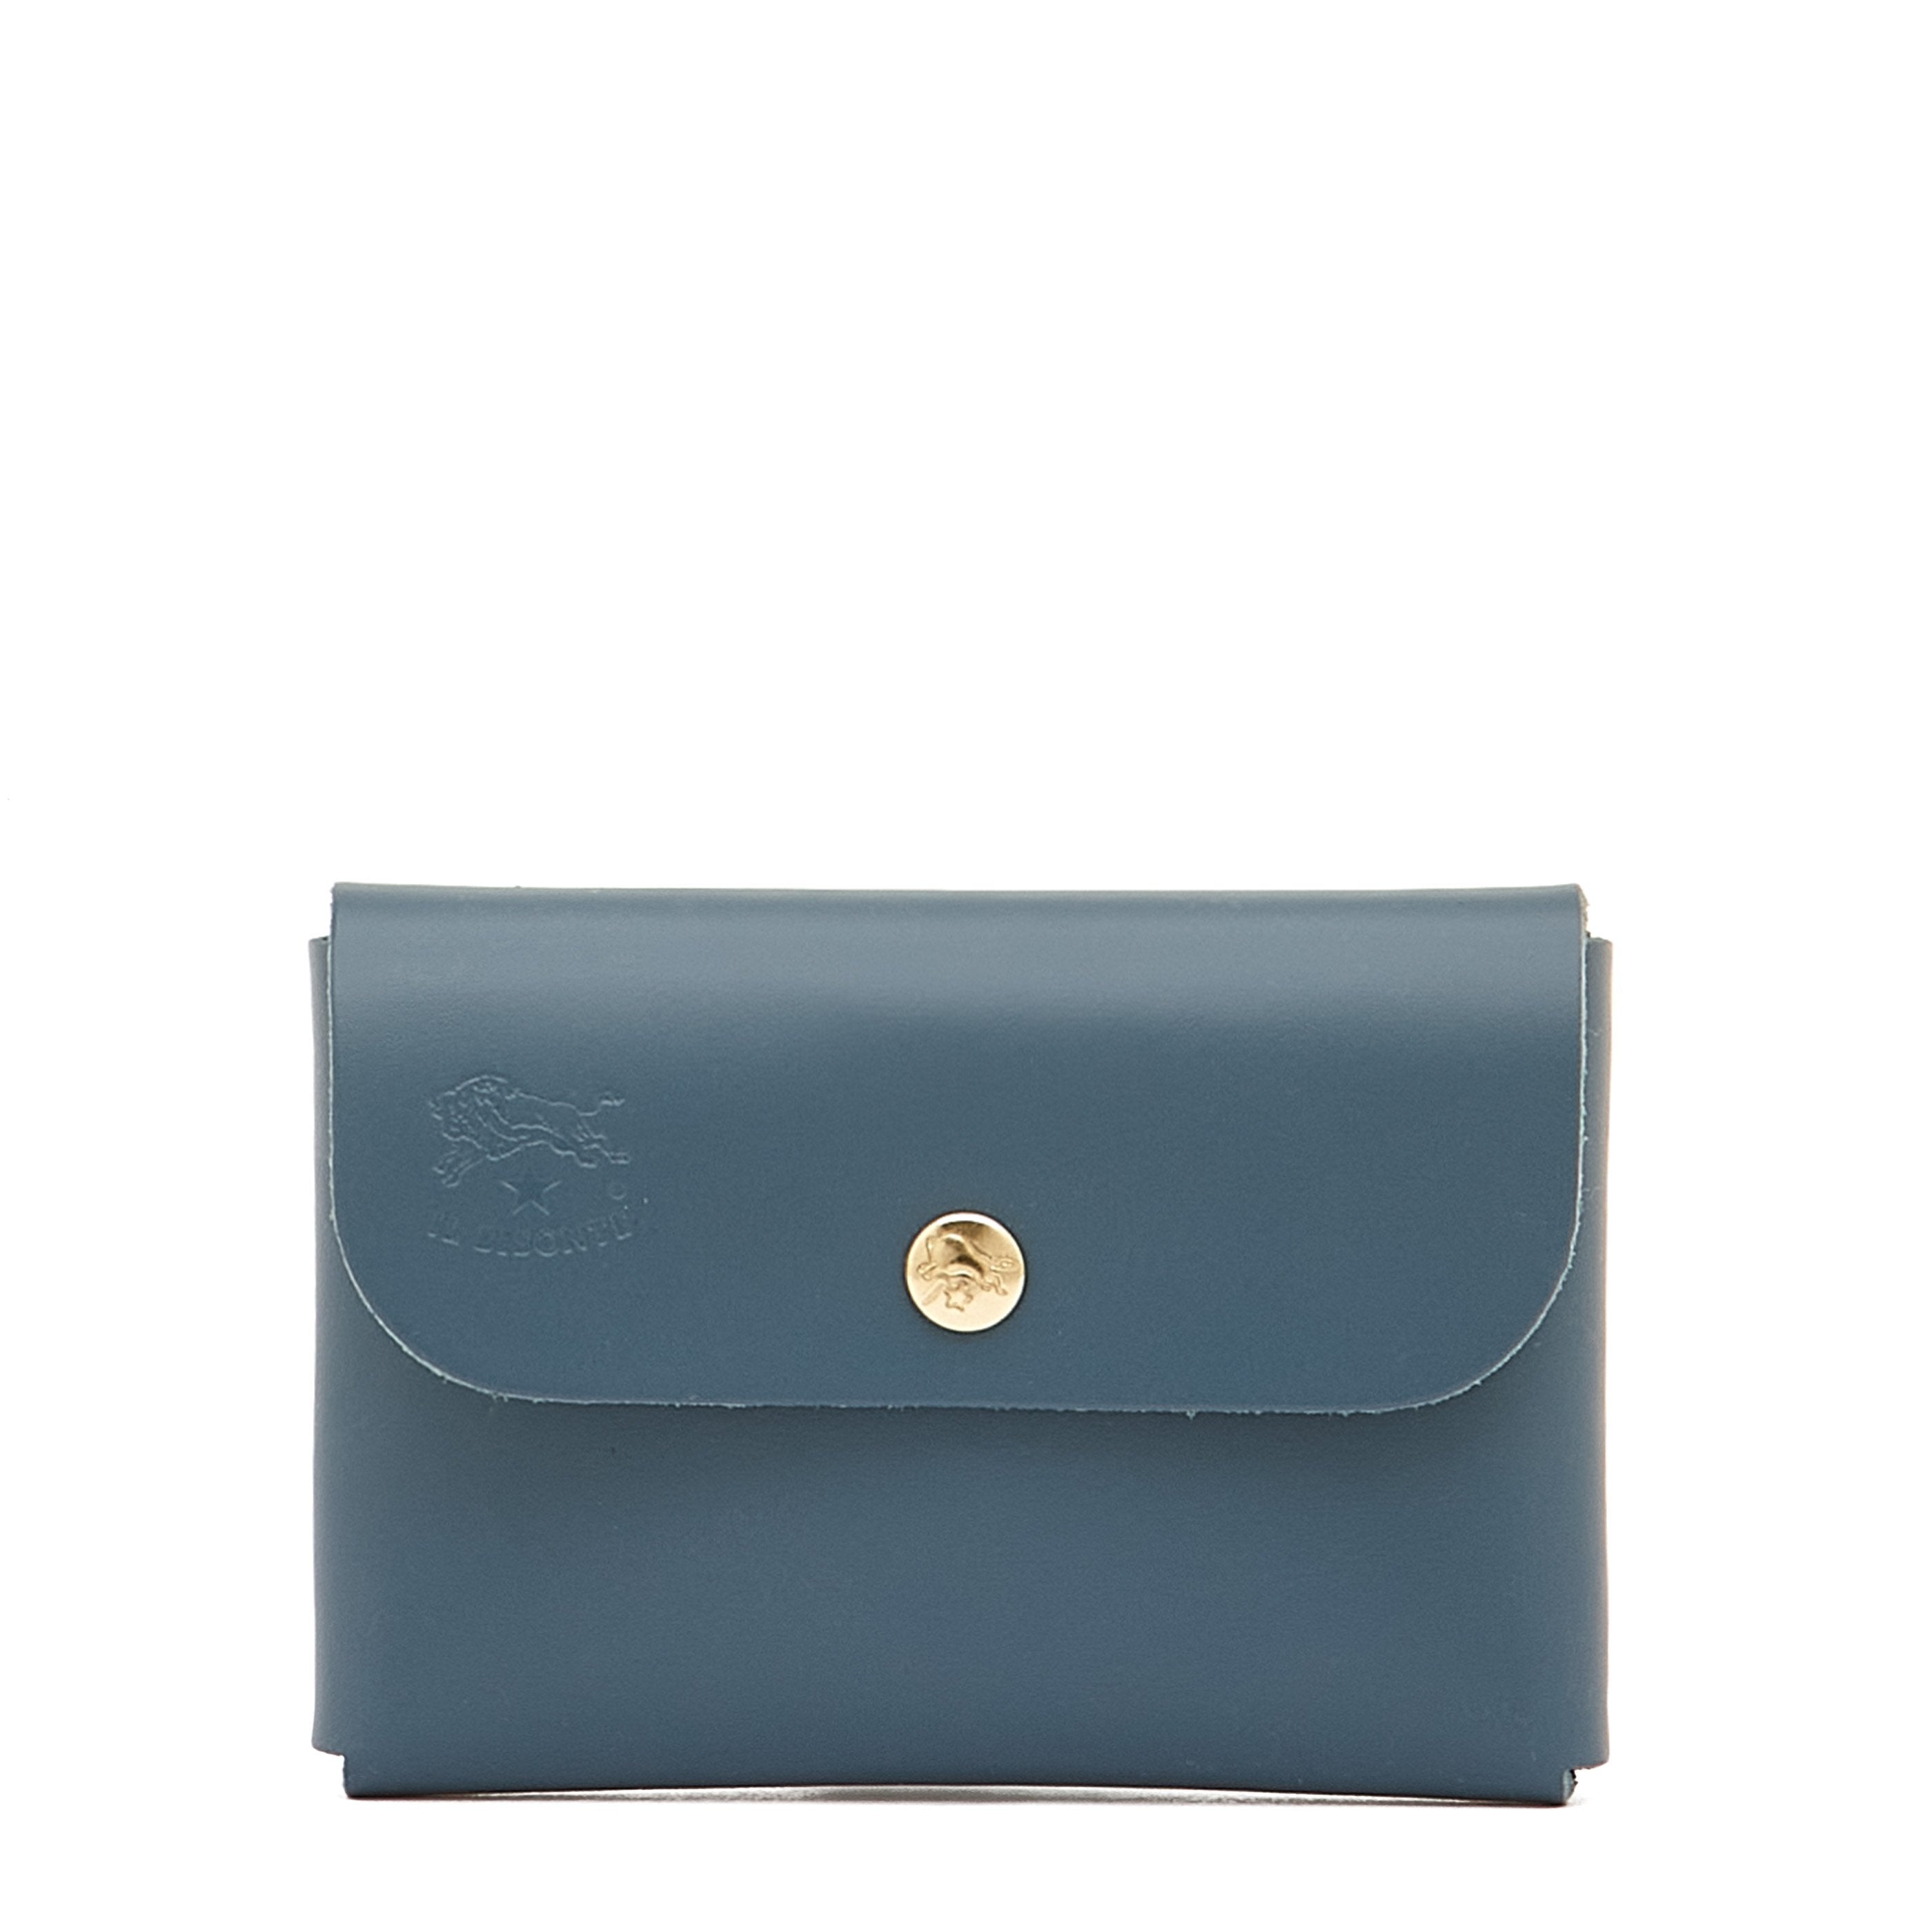 Card case in leather color blue denim